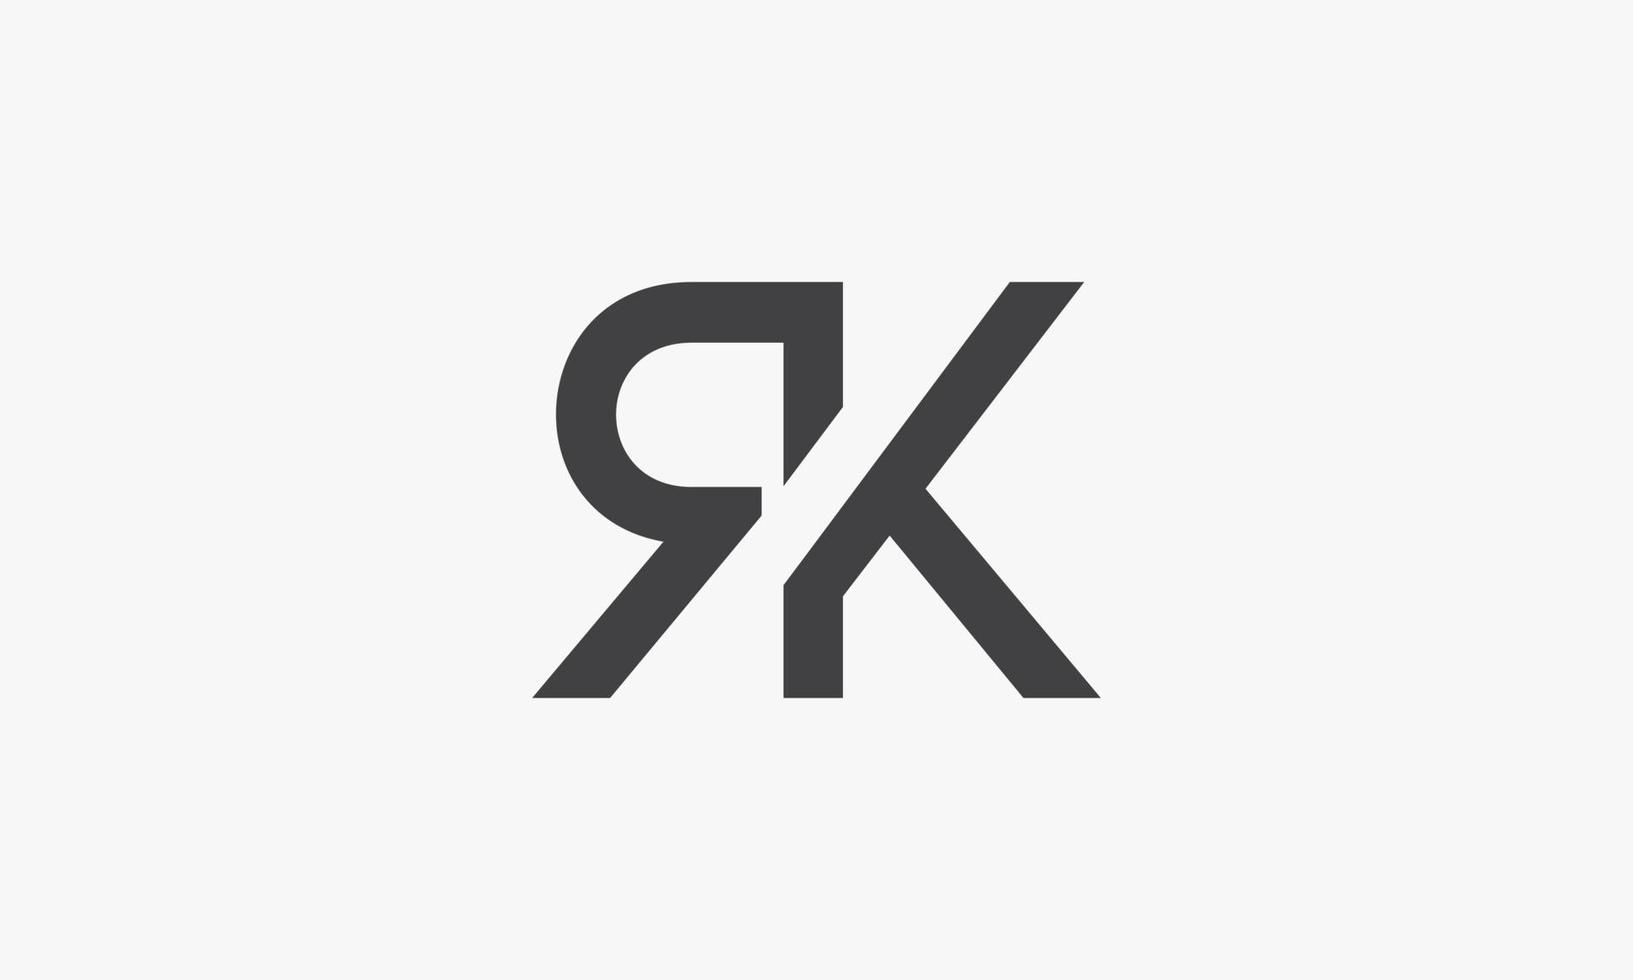 RK letter logo isolated on white background. vector